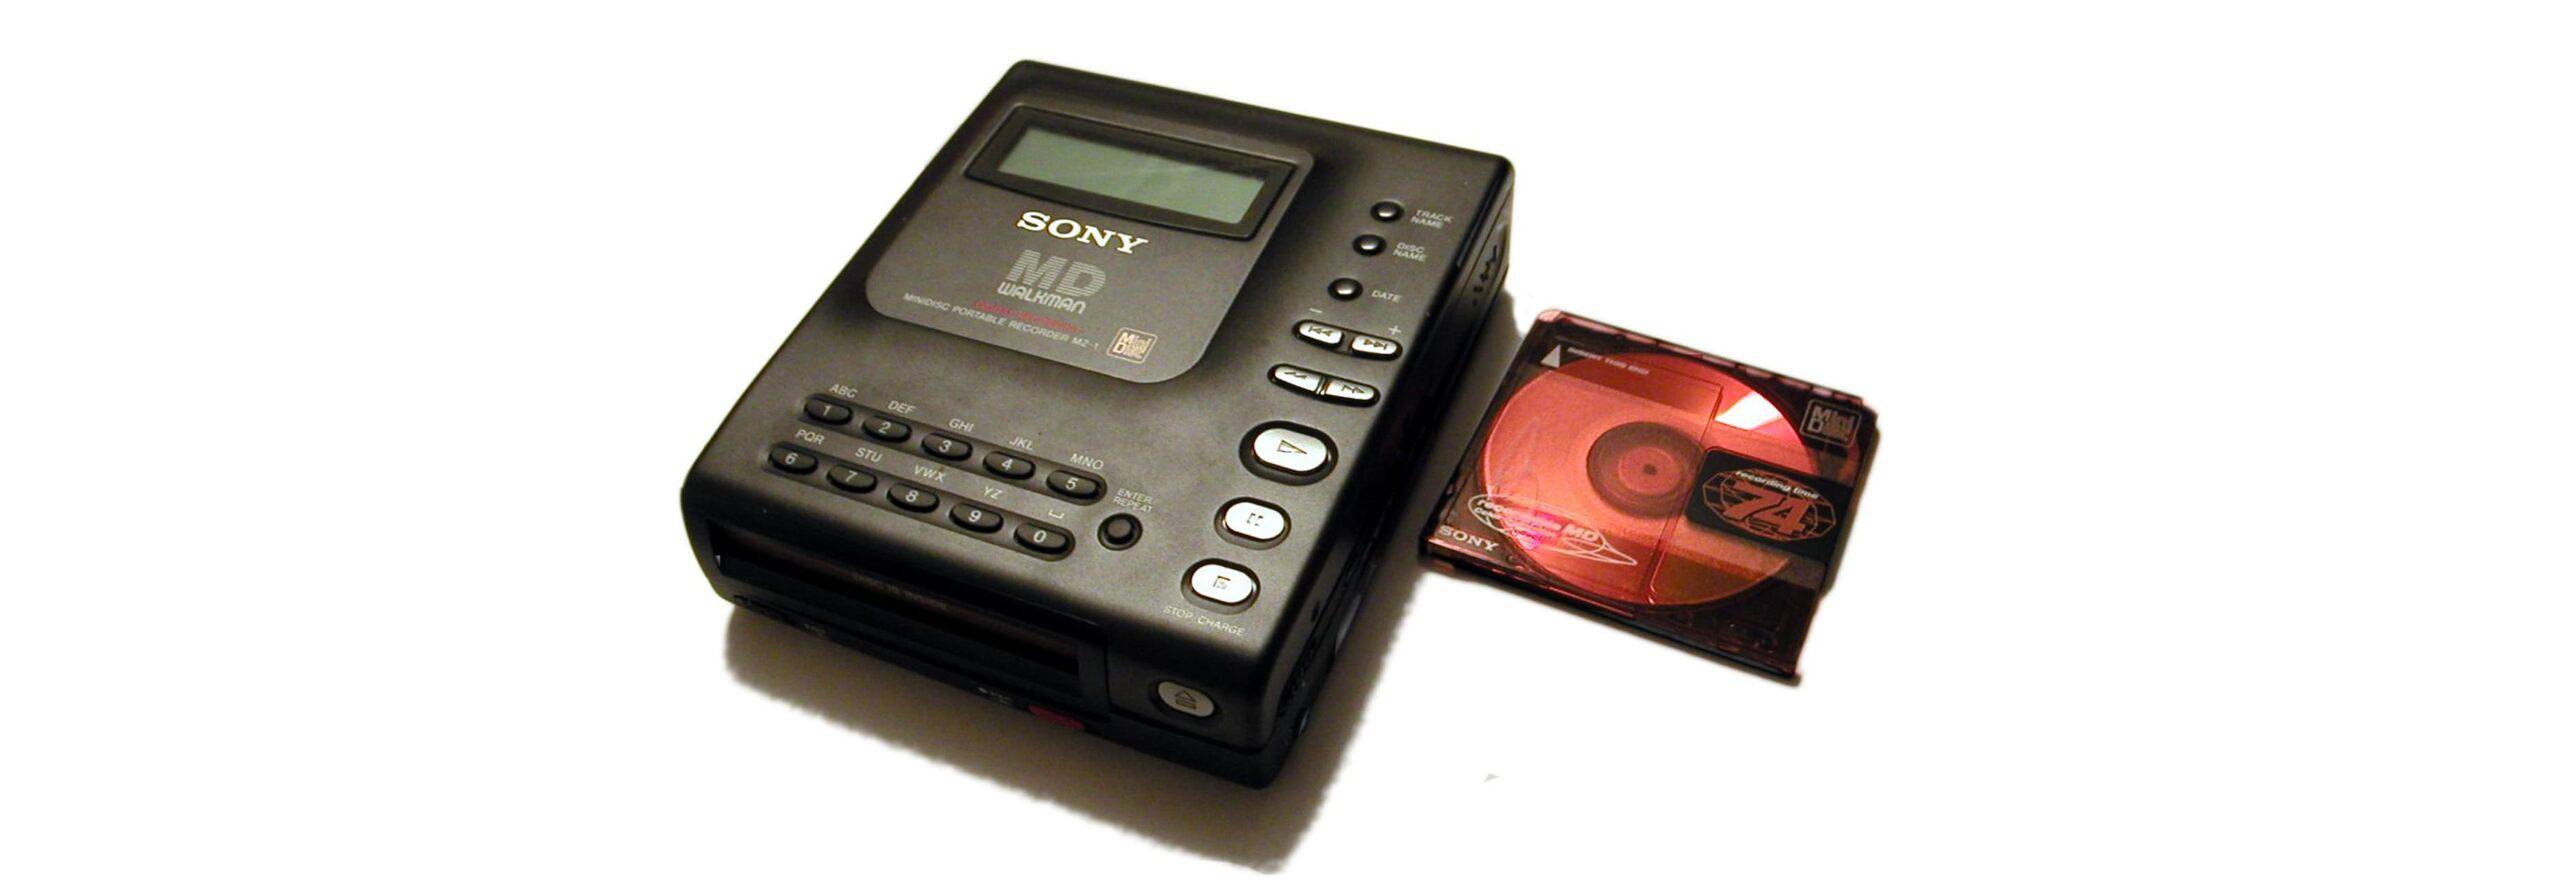 Sony's MD Audio device